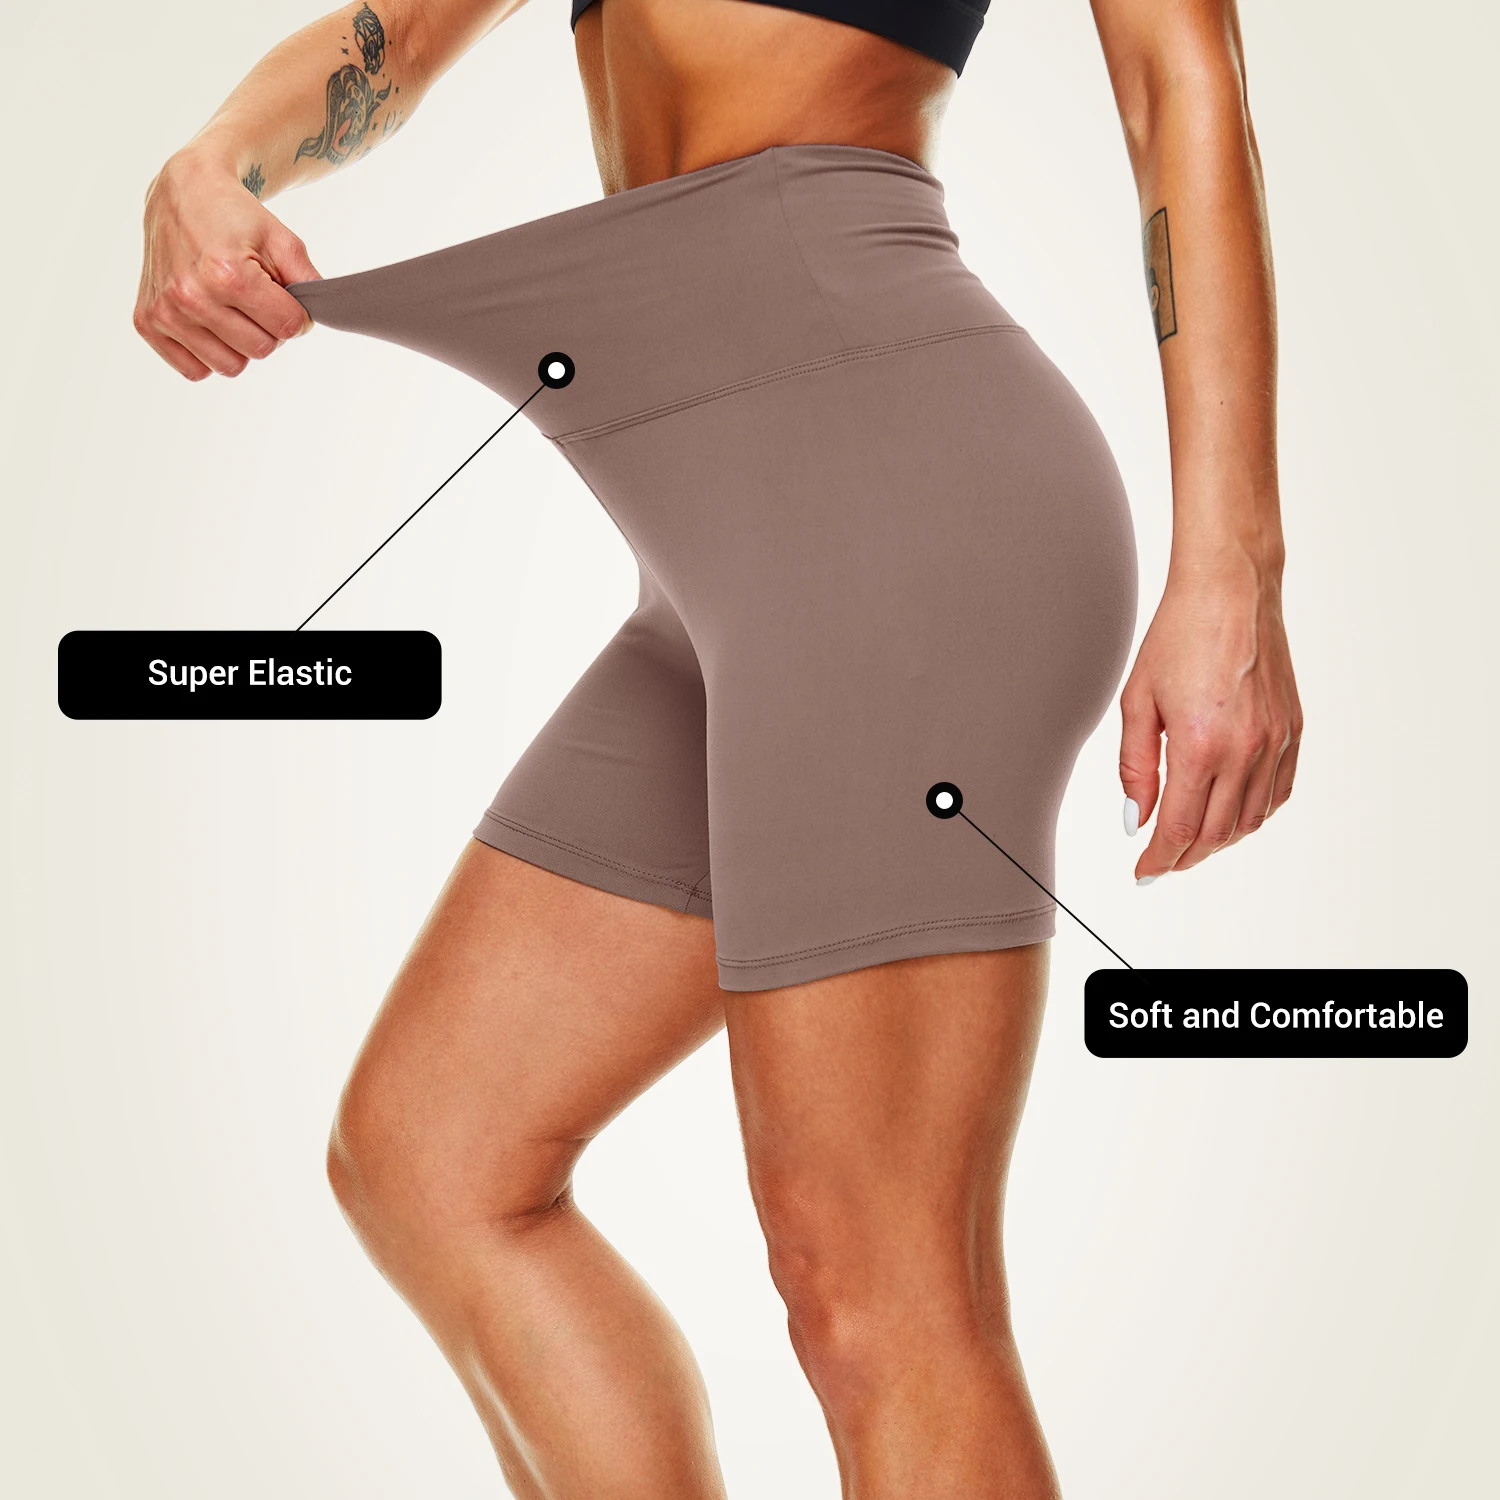 Custom Fabric and Printing yoga pants shorts gym women butt lifting leggings biker shorts for adults